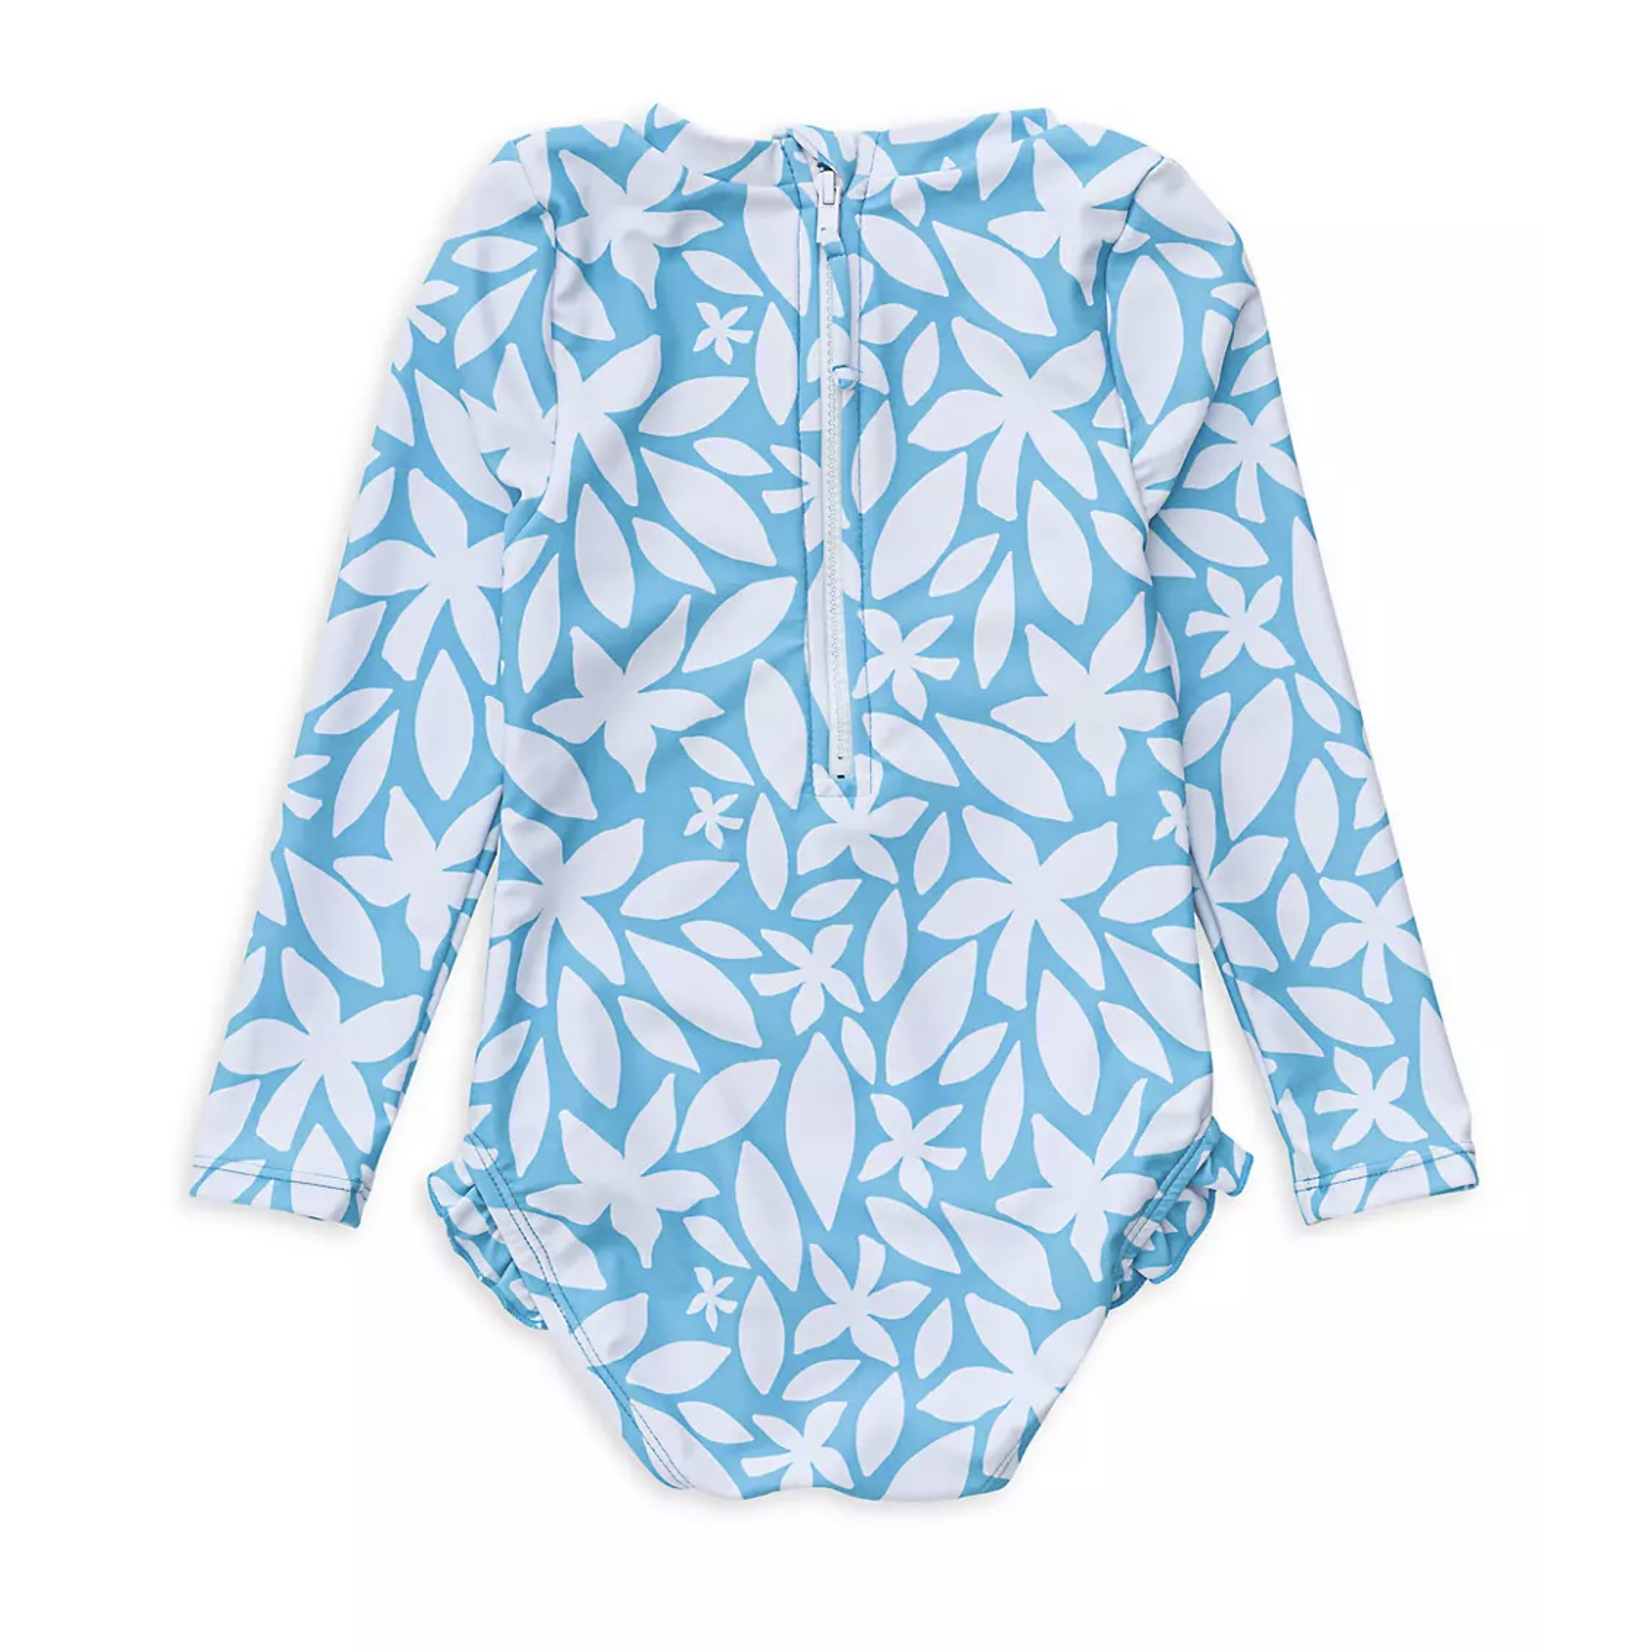 SNAPPERROCK Aqua Bloom Long-Sleeve Surf Suit